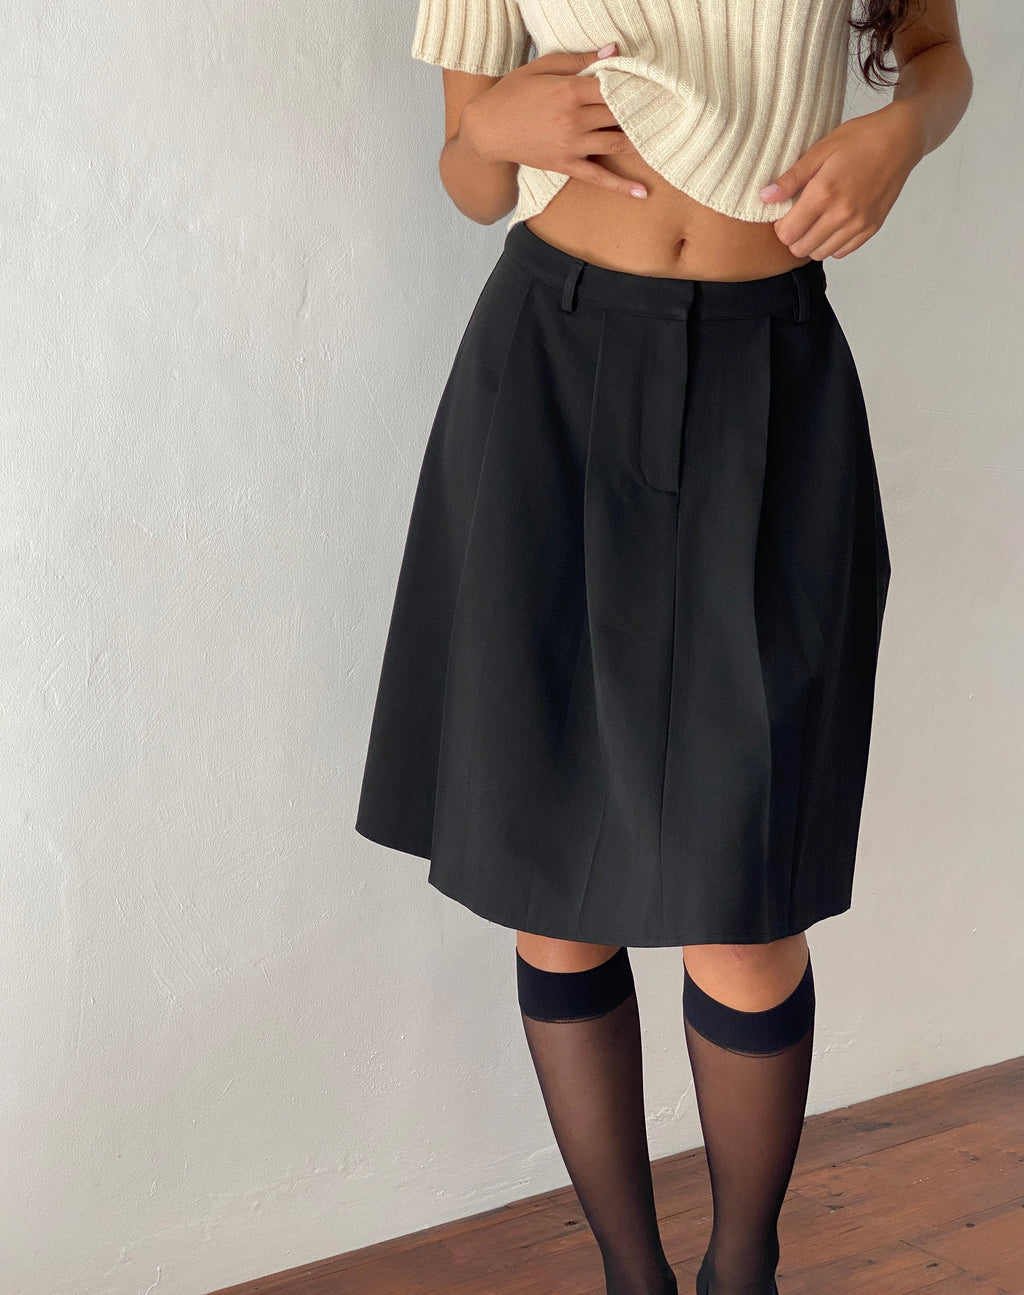 Colette Pleated Knee Length Skirt in Black Tailoring